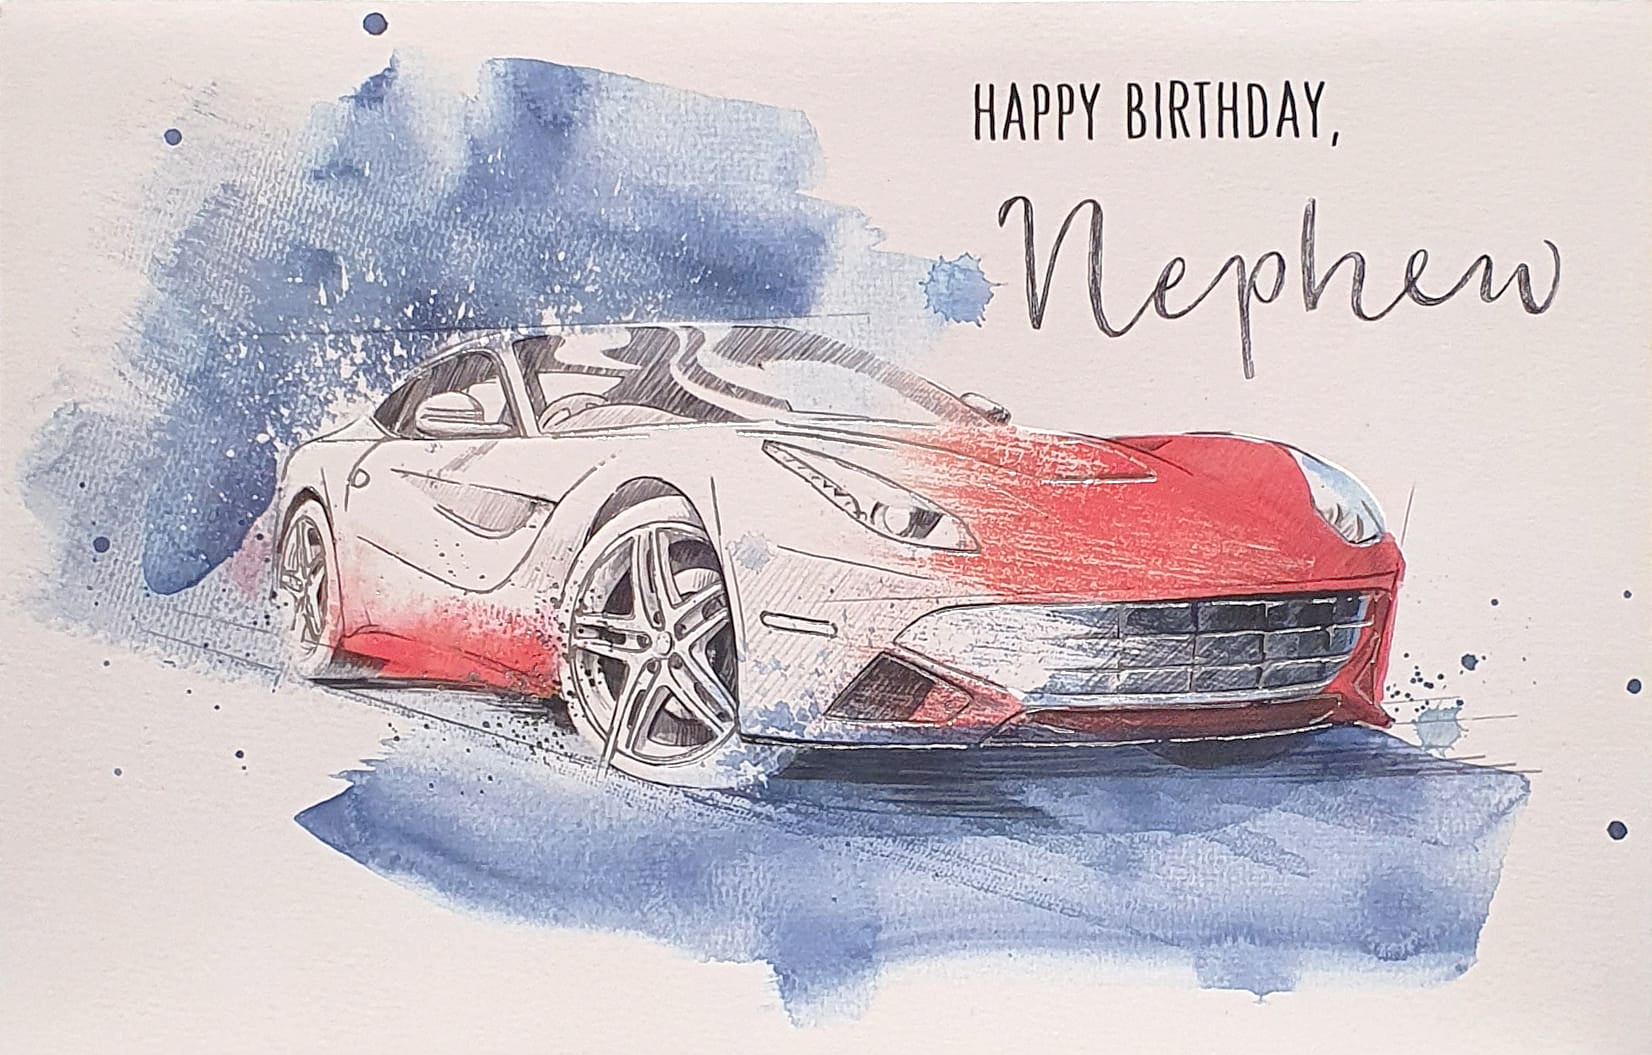 Nephew Birthday Card - Illustration of a Ferrari